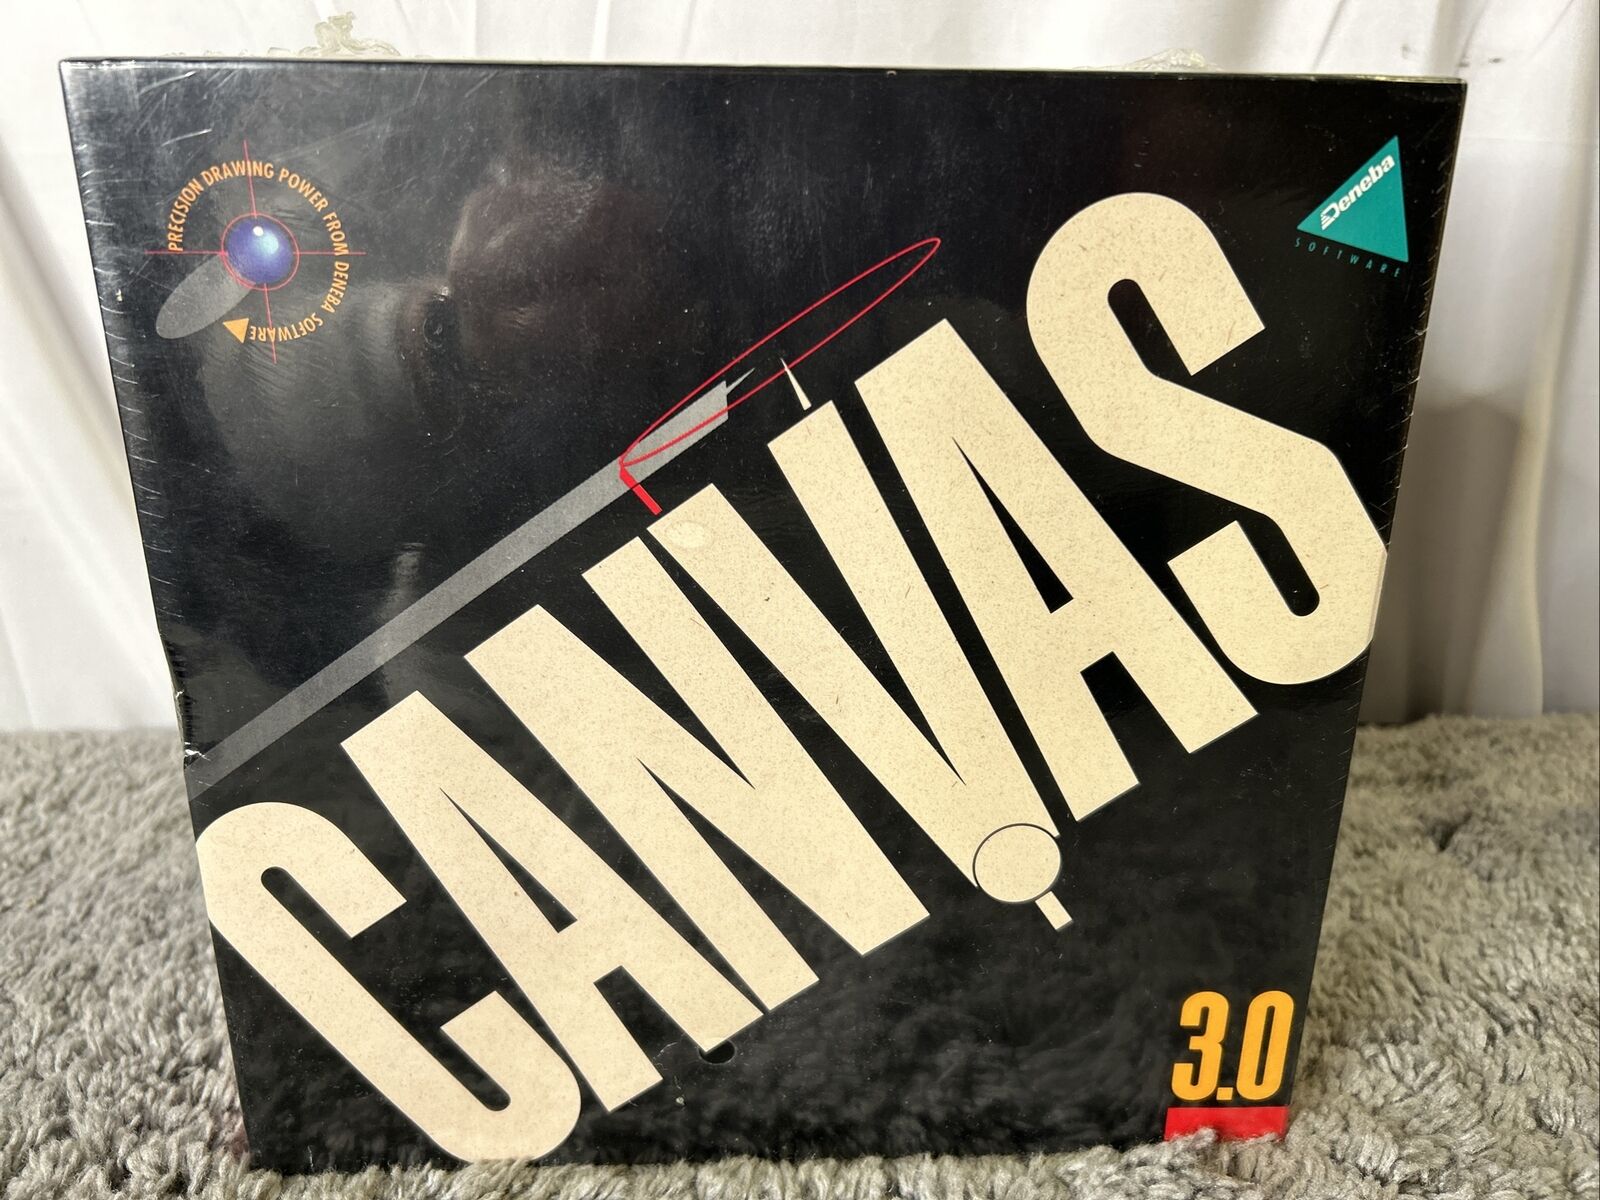 CANVAS 3.0 Power Mac Macintosh Graphic Software by Deneba Vintage New Sealed